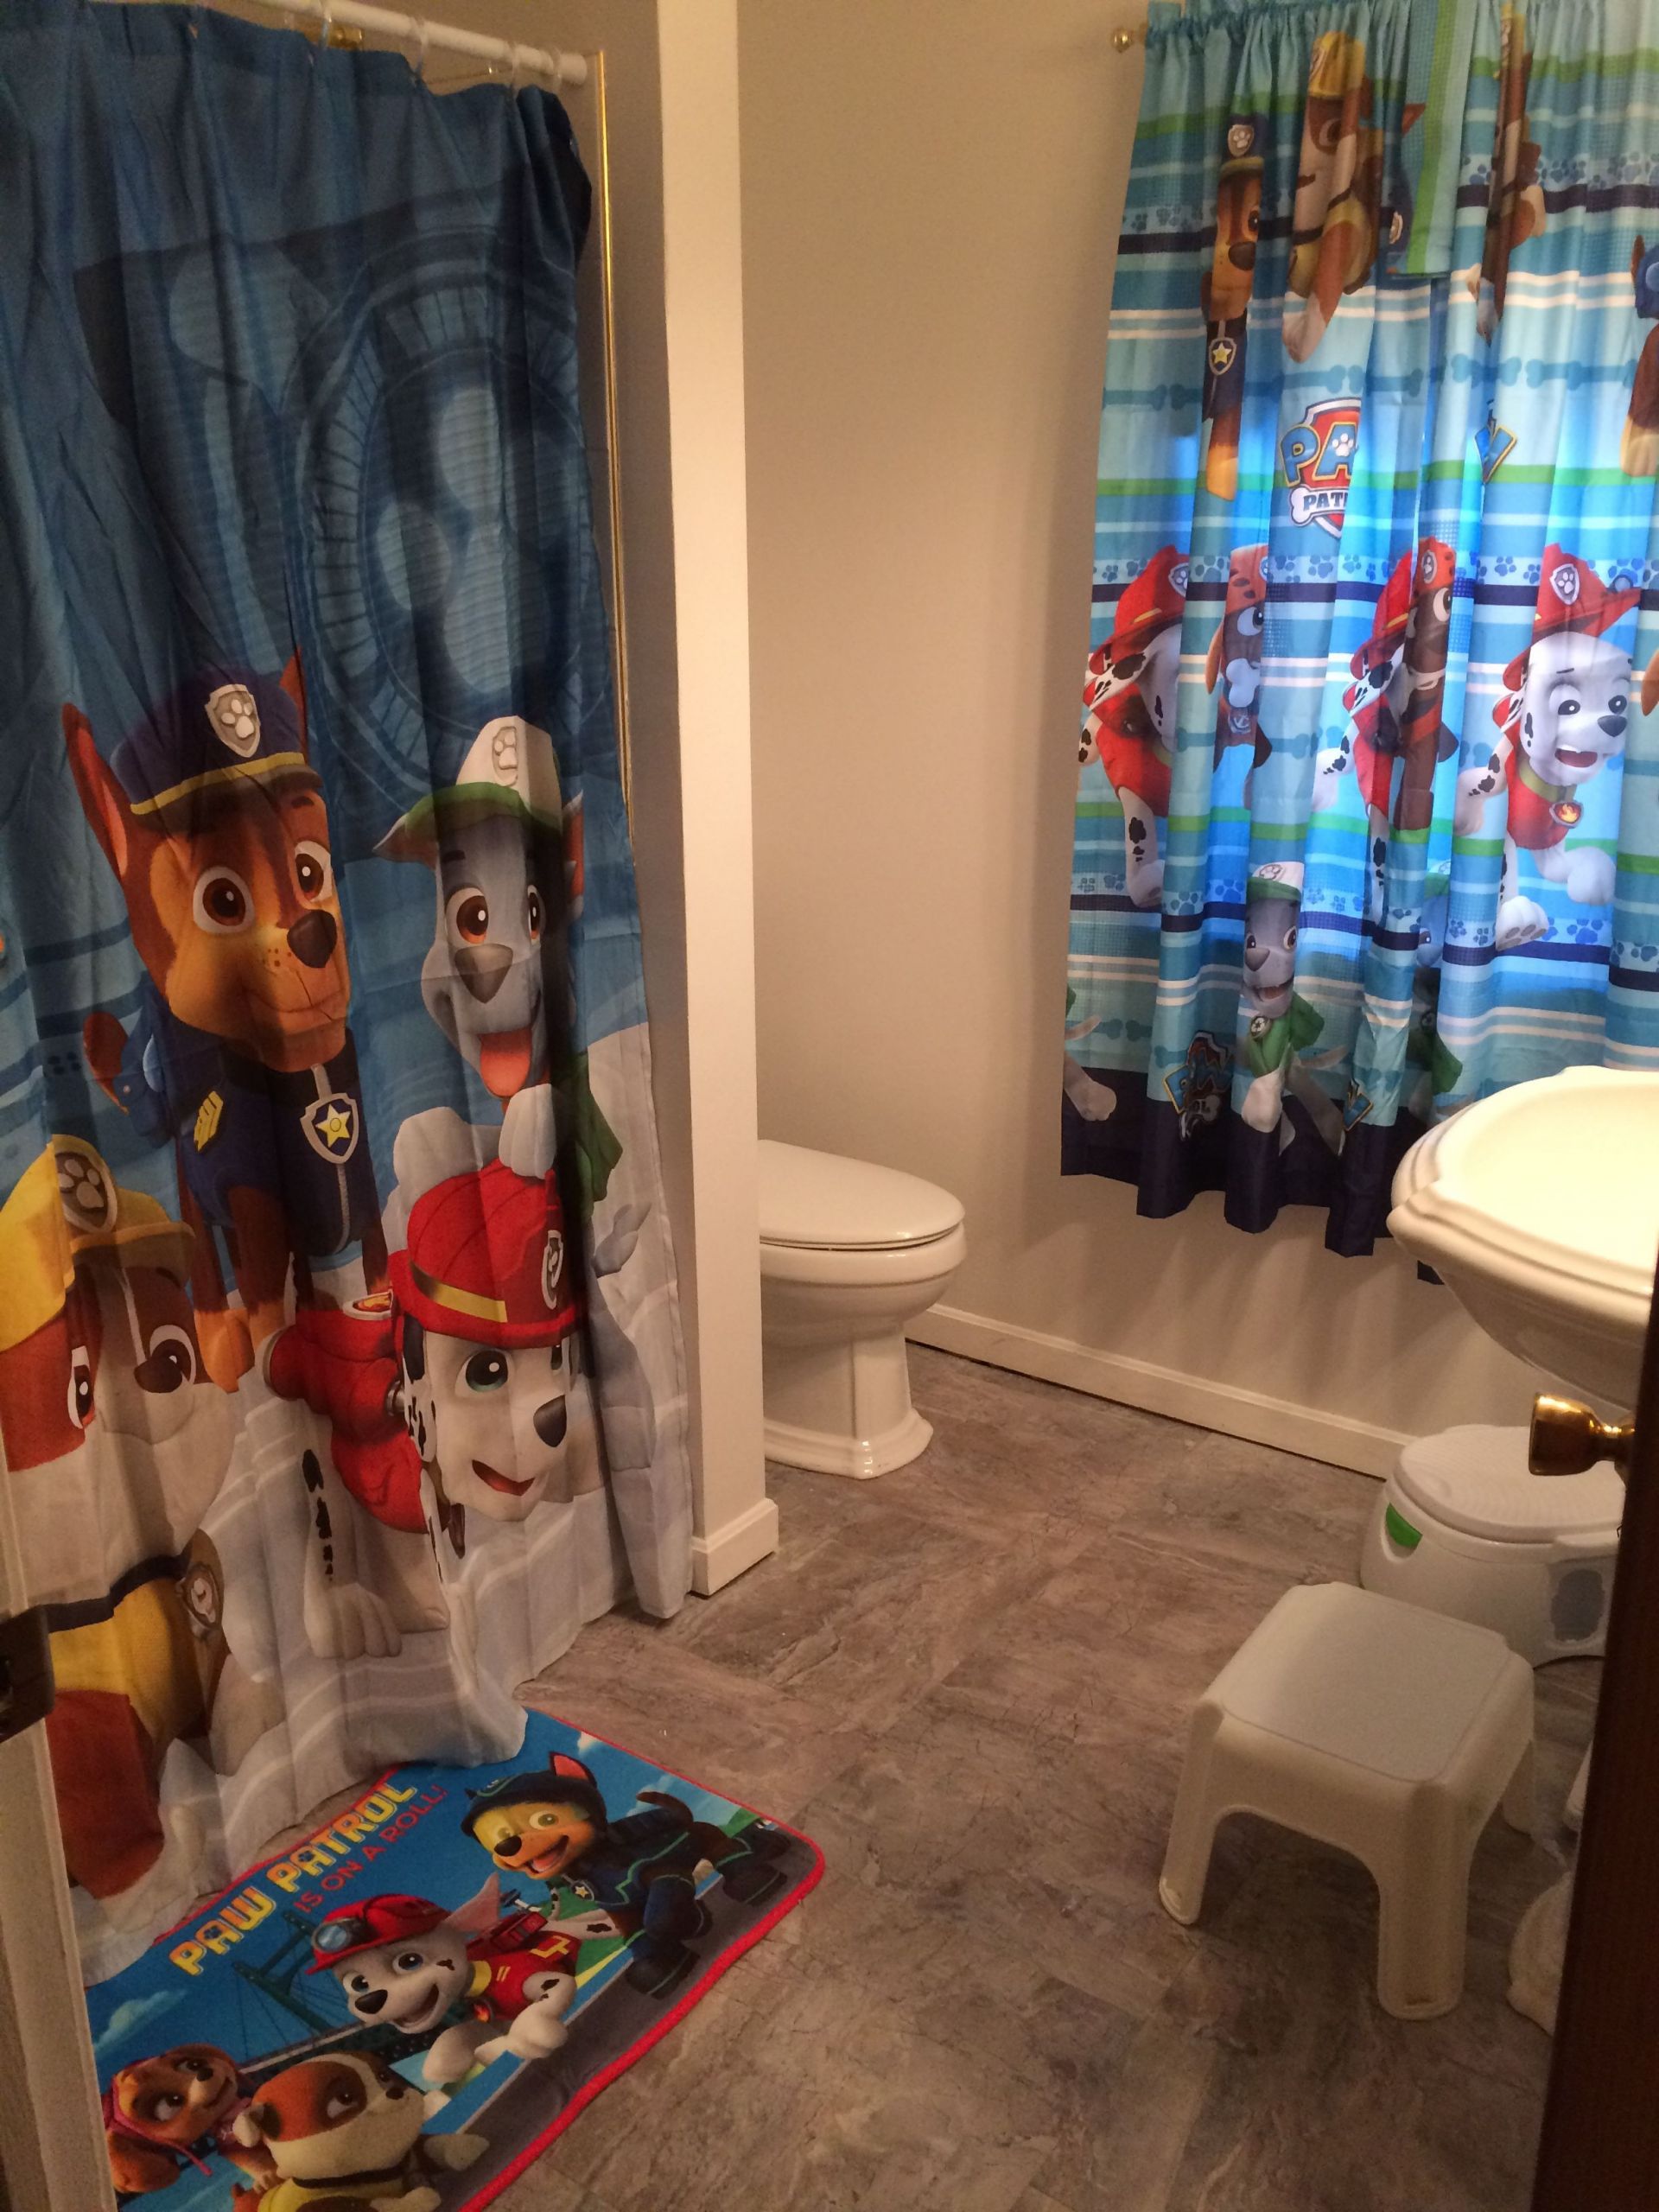 Kids Bathroom Sets Walmart
 Paw patrol bathroom decor Decor purchased at Walmart